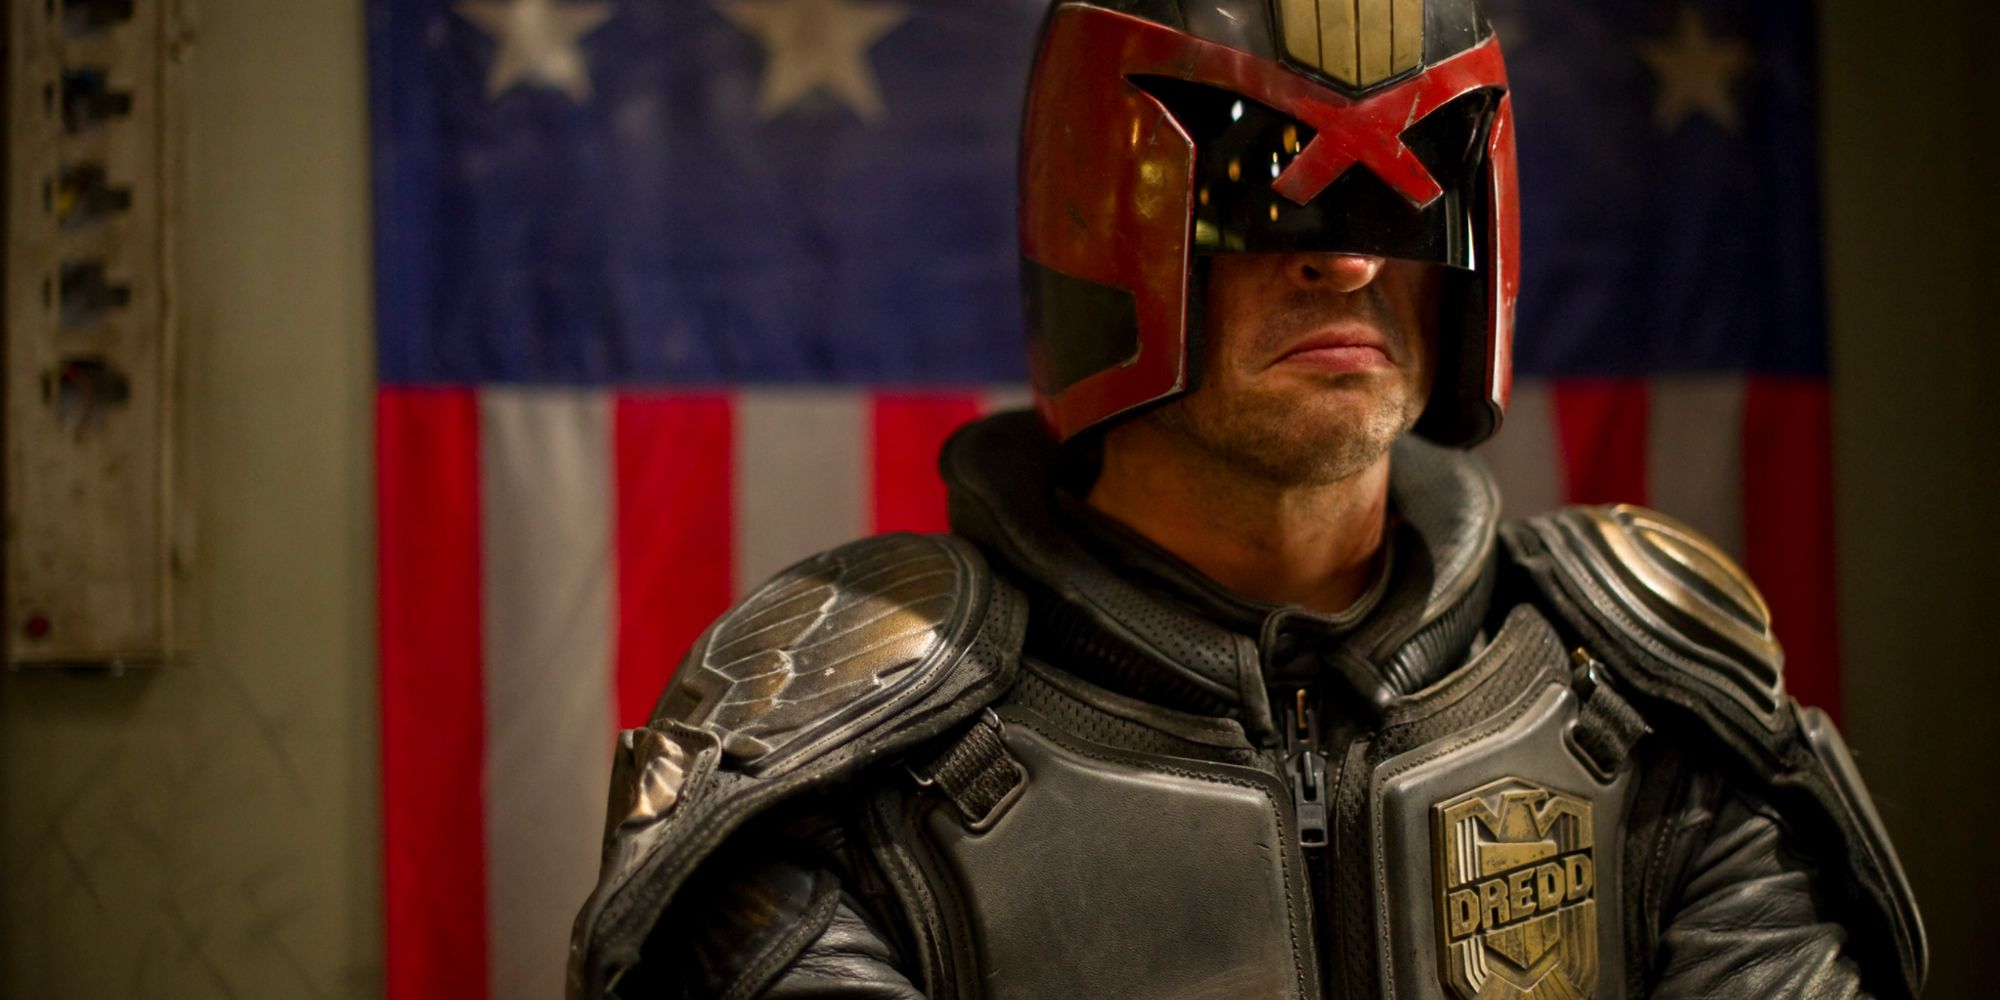 Karl Urban as Judge Dredd